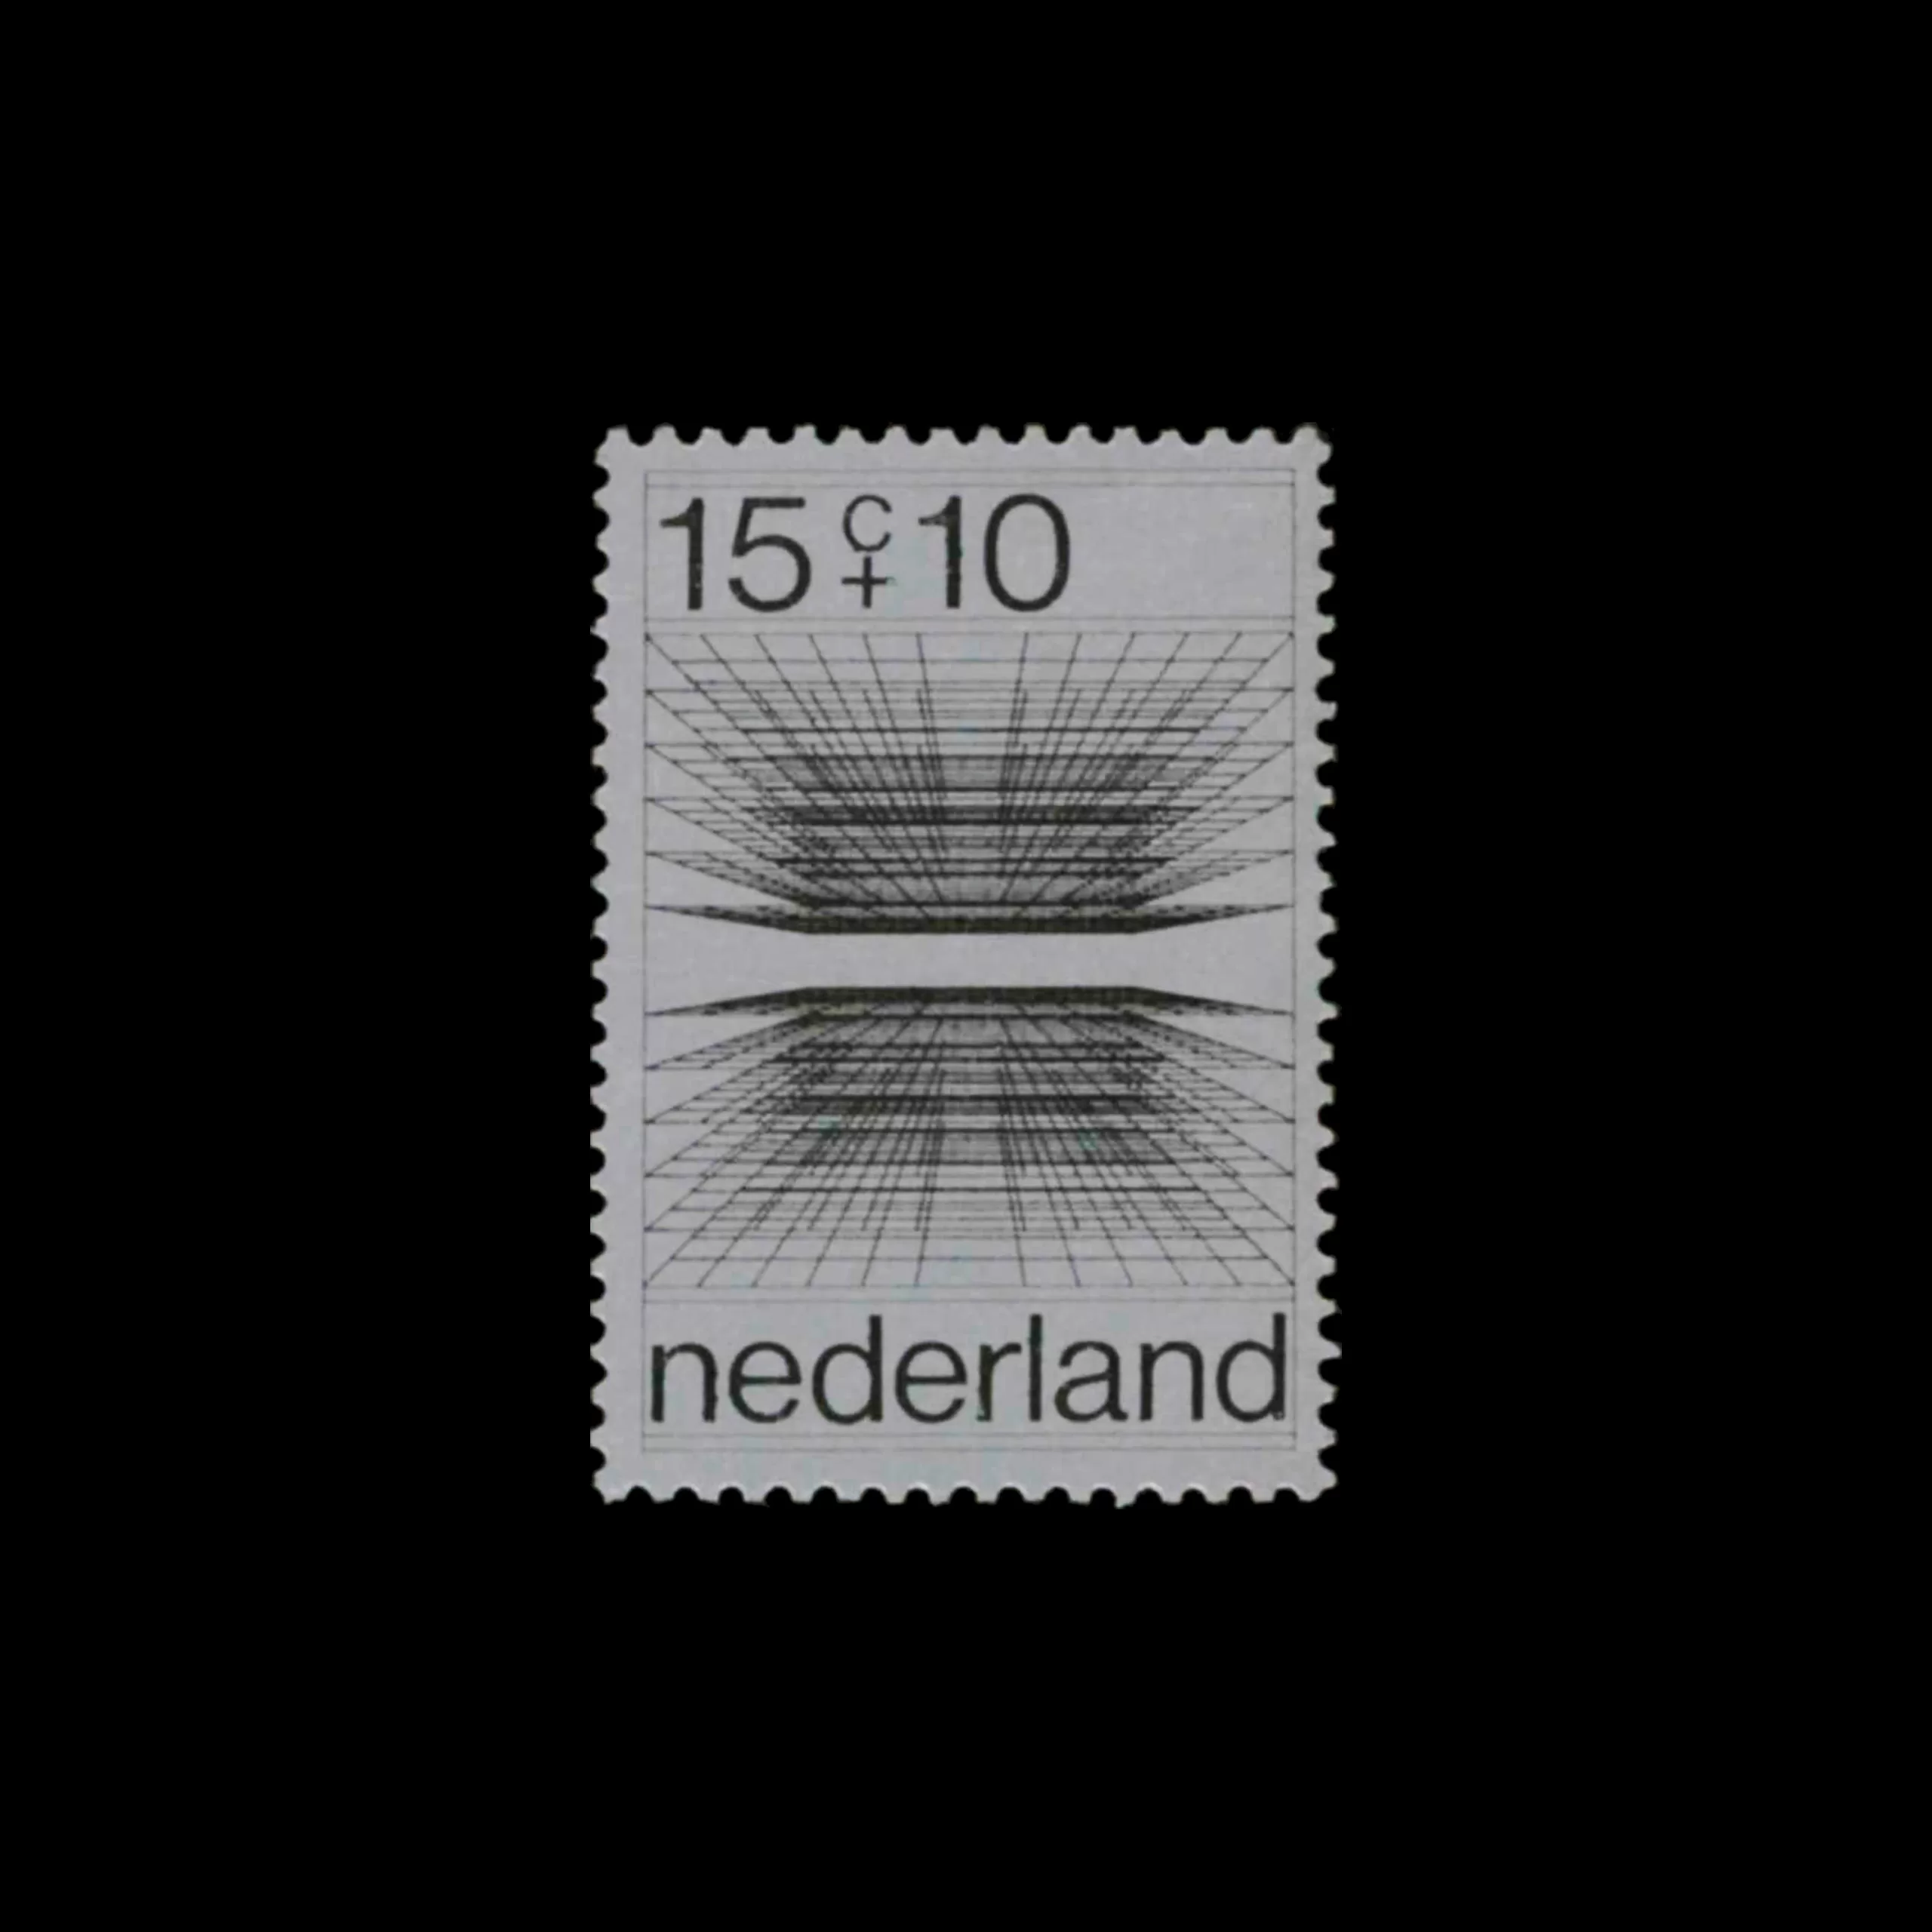 Social Welfare Funds, Netherlands Stamps, 1970. Designed by Ootje Oxenaar